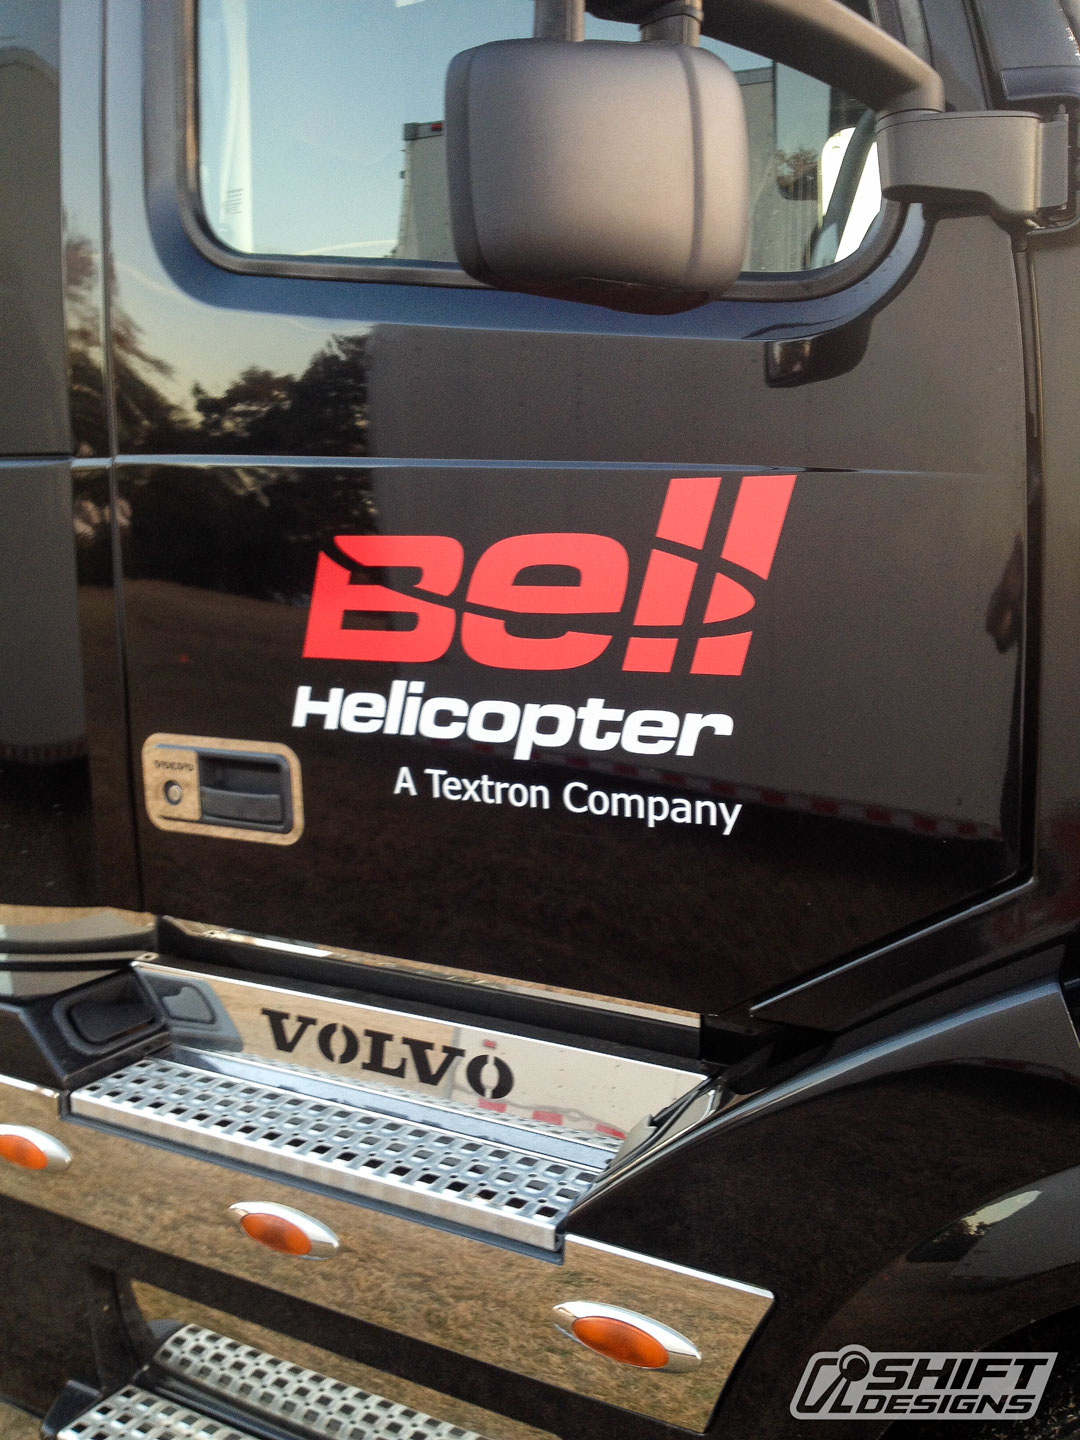 Bell-Helicopter-Truck-Vinyl-Graphics-1